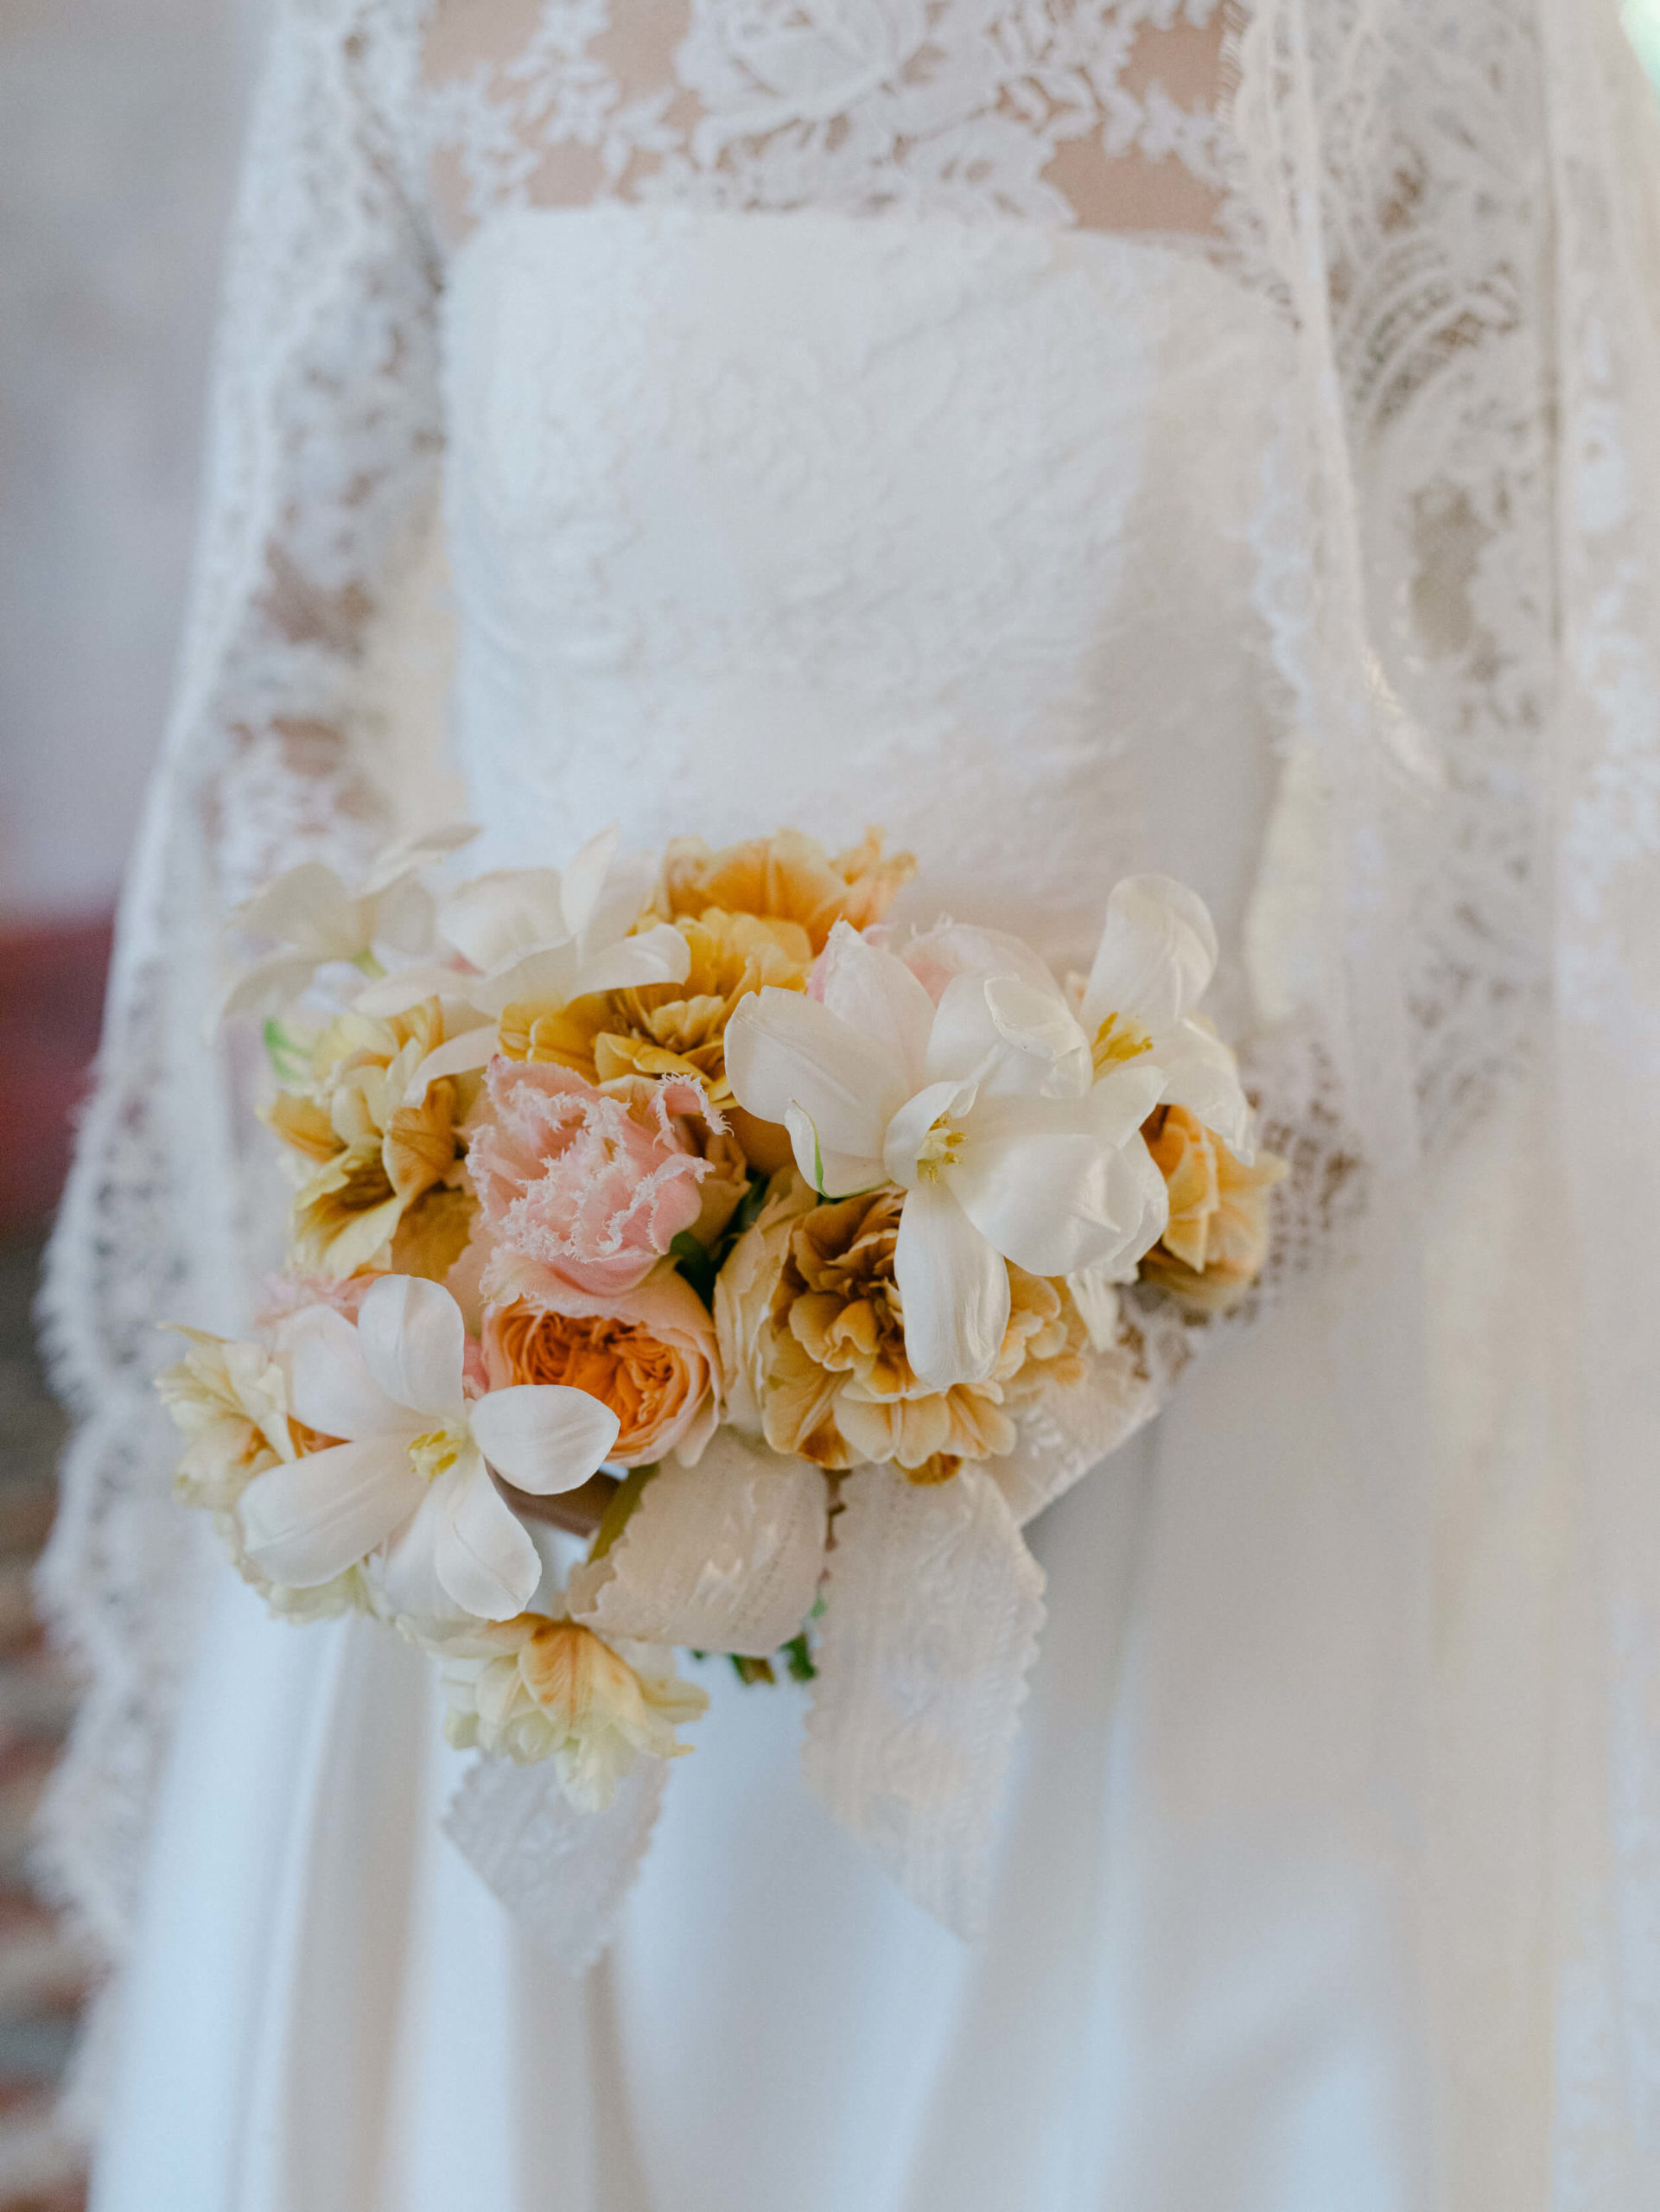 Bride holding bouquet in her wedding dress